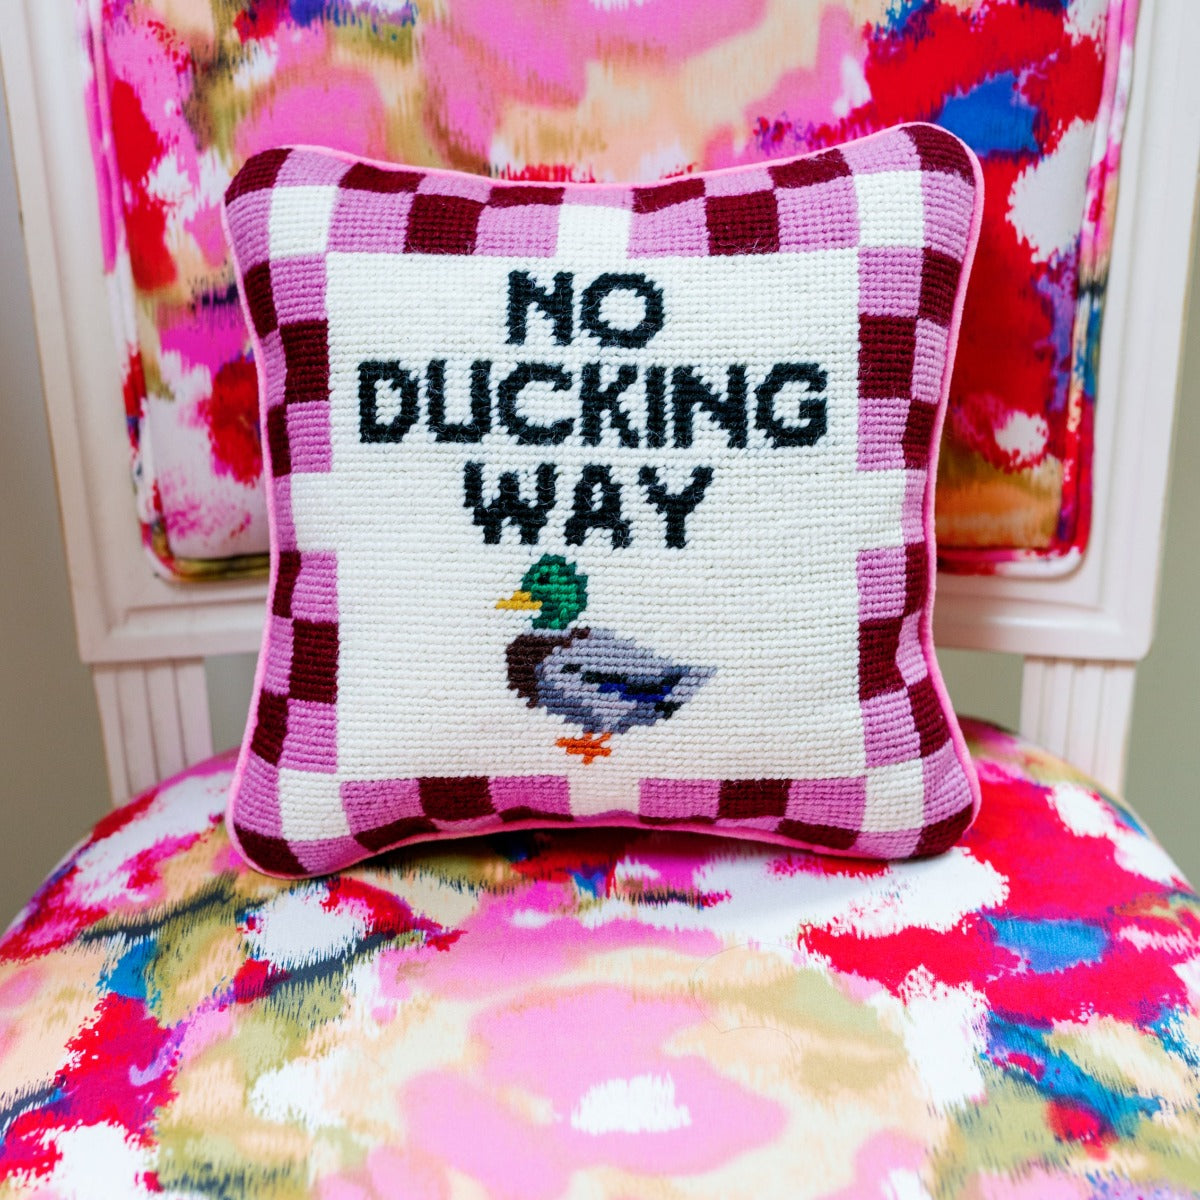 No Ducking Way Needlepoint Pillow